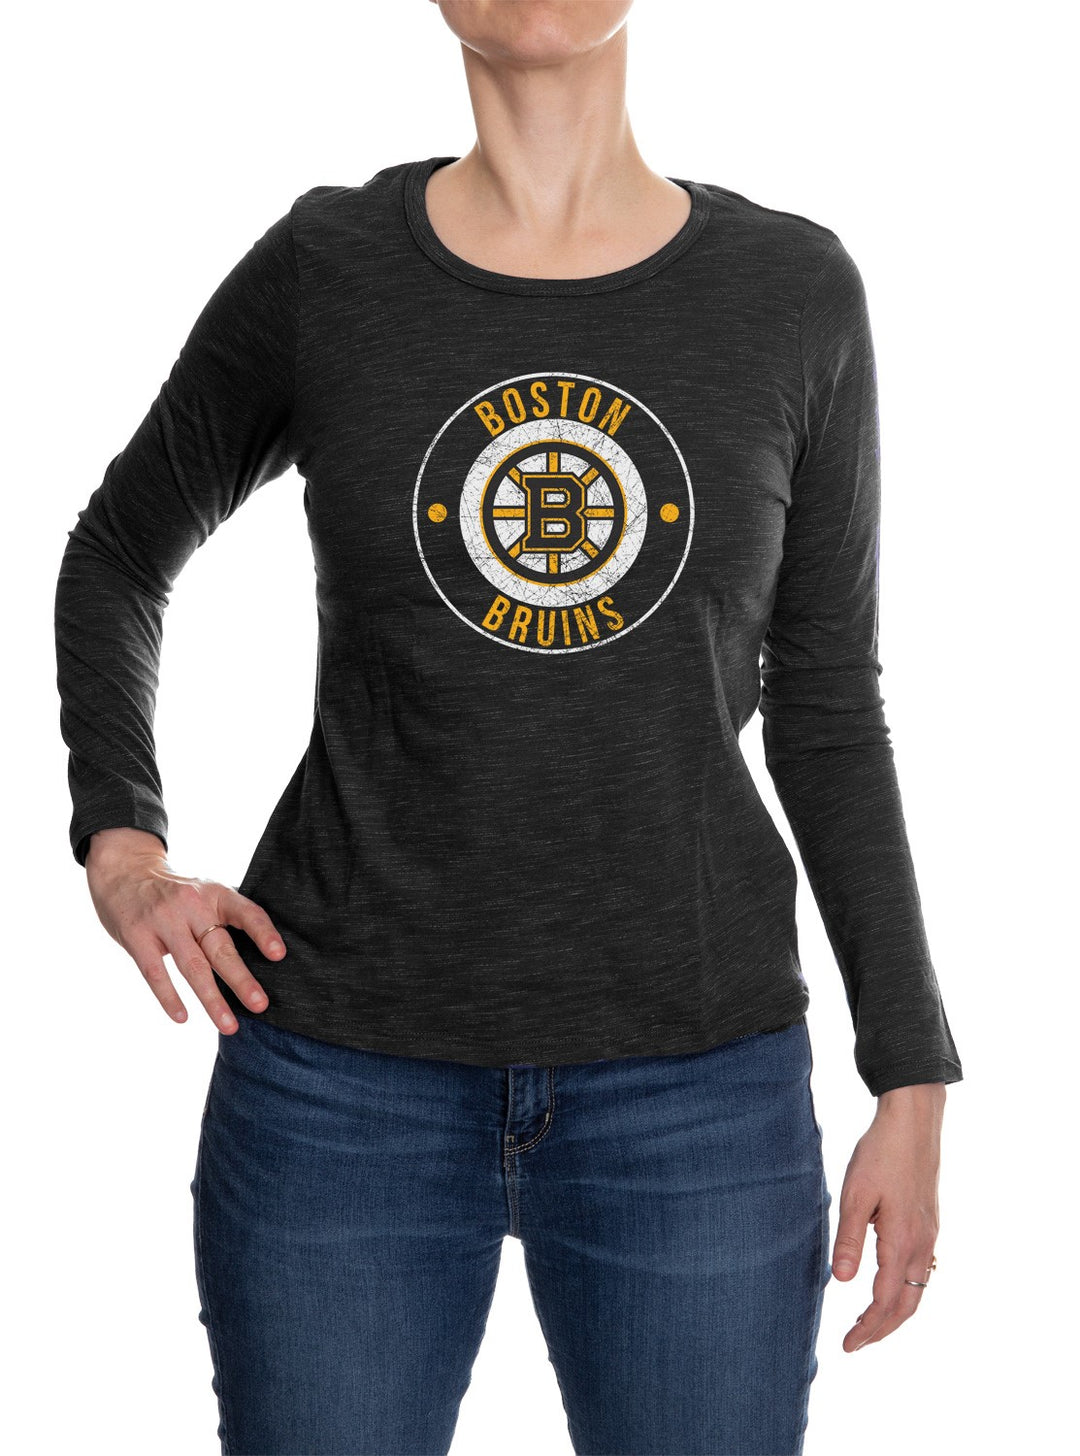 Boston Bruins Women's Spiral Tie-Dye Long Sleeve T-Shirt - Black